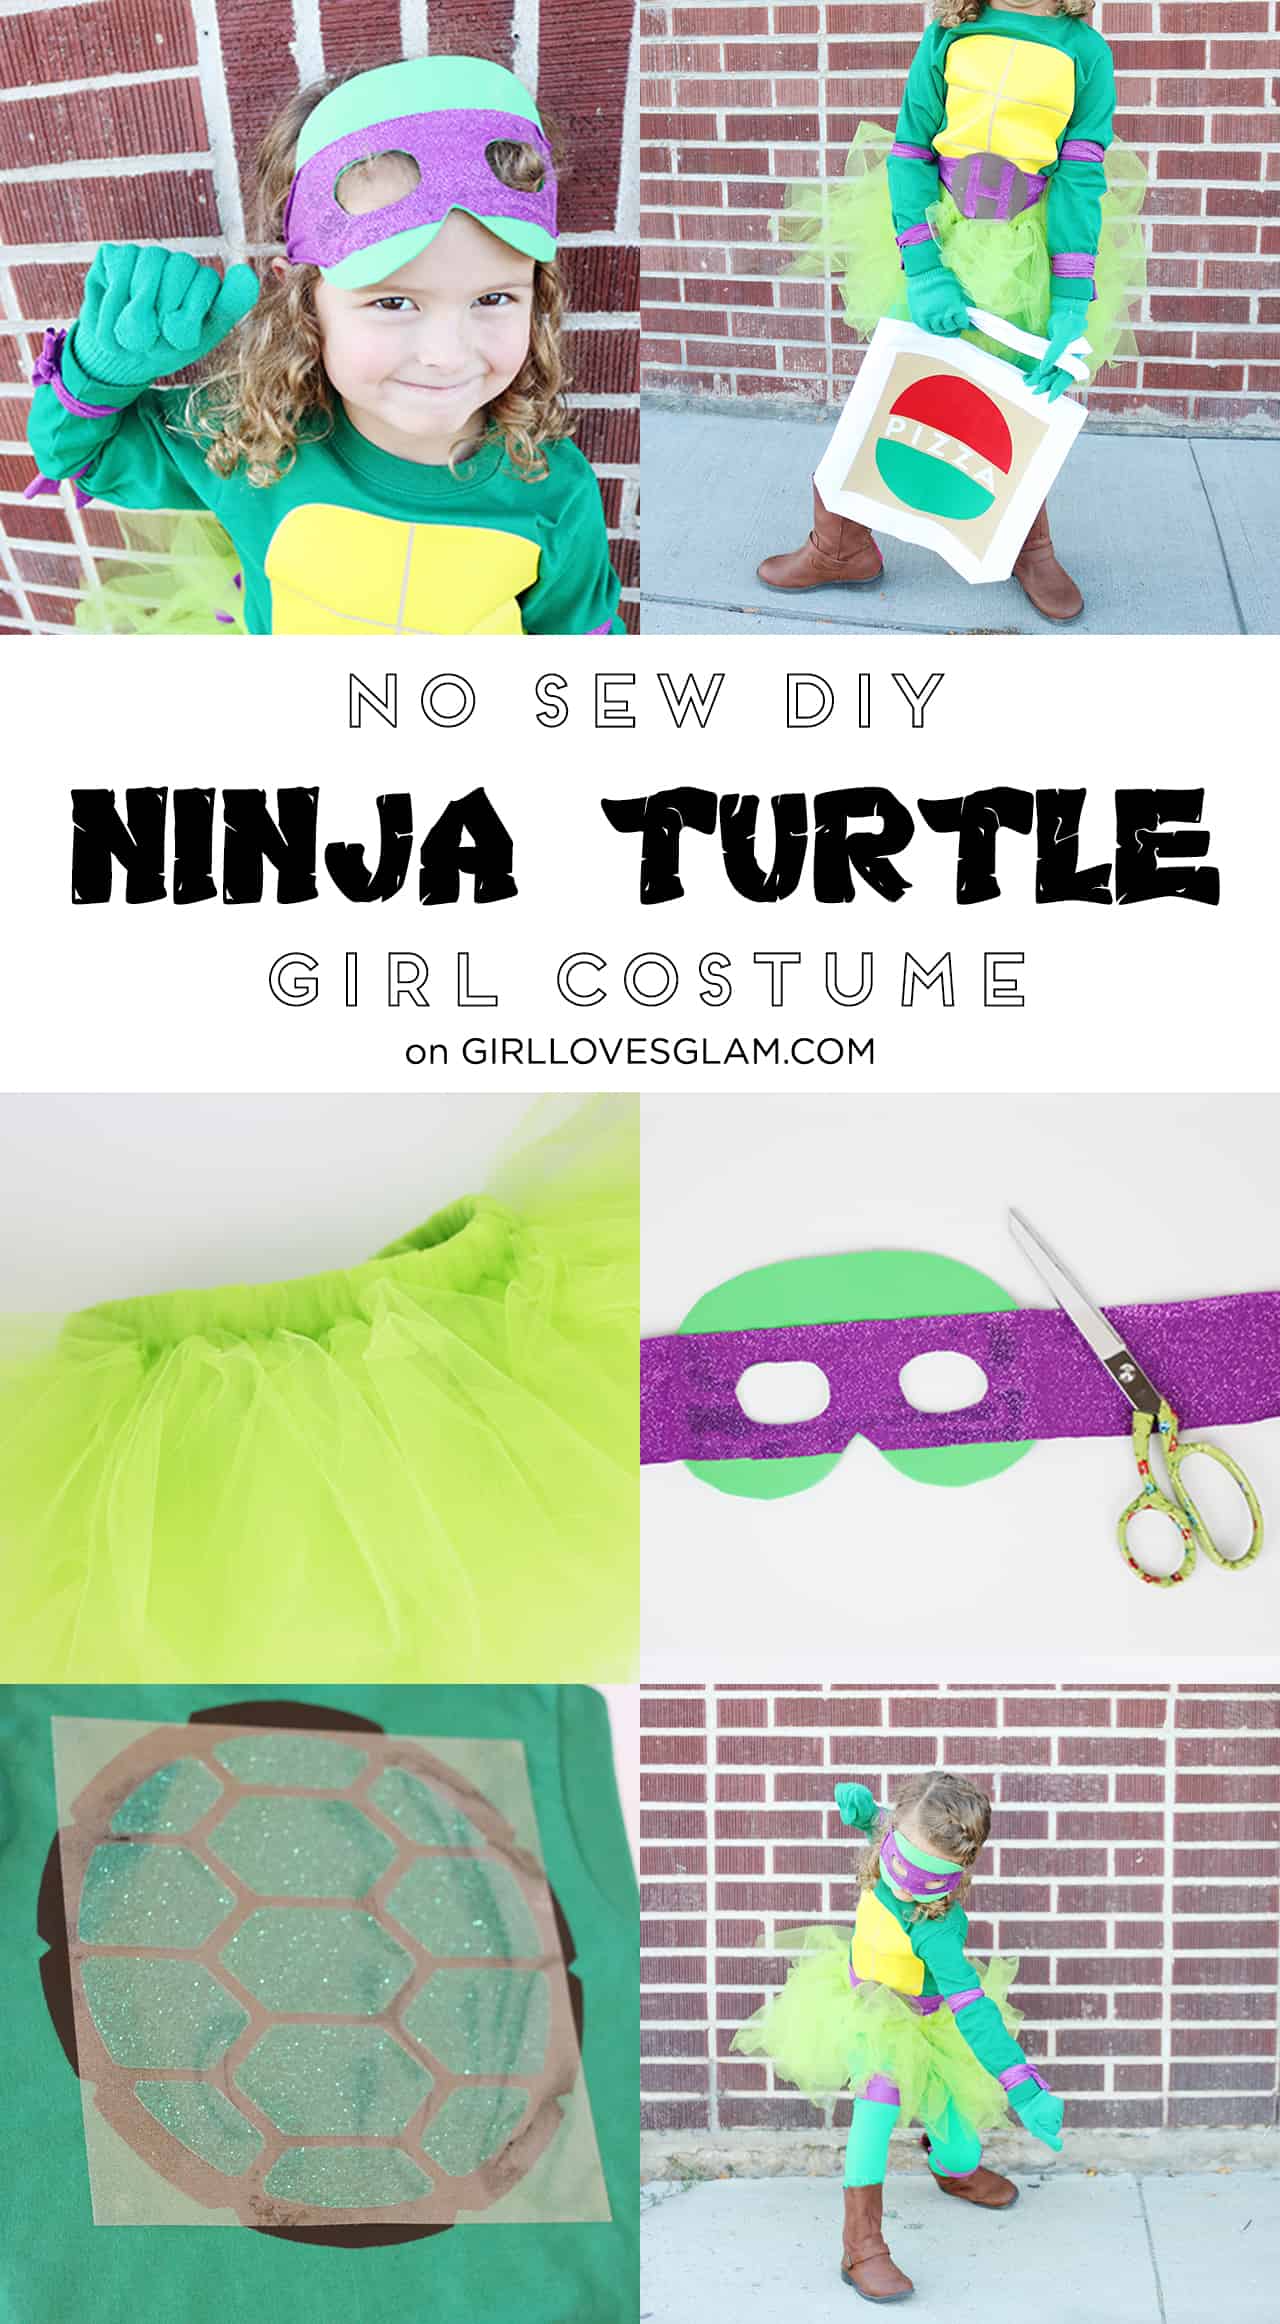 https://www.girllovesglam.com/wp-content/uploads/2016/10/No-Sew-DIY-Ninja-Turtle-Girl-Costume.jpg